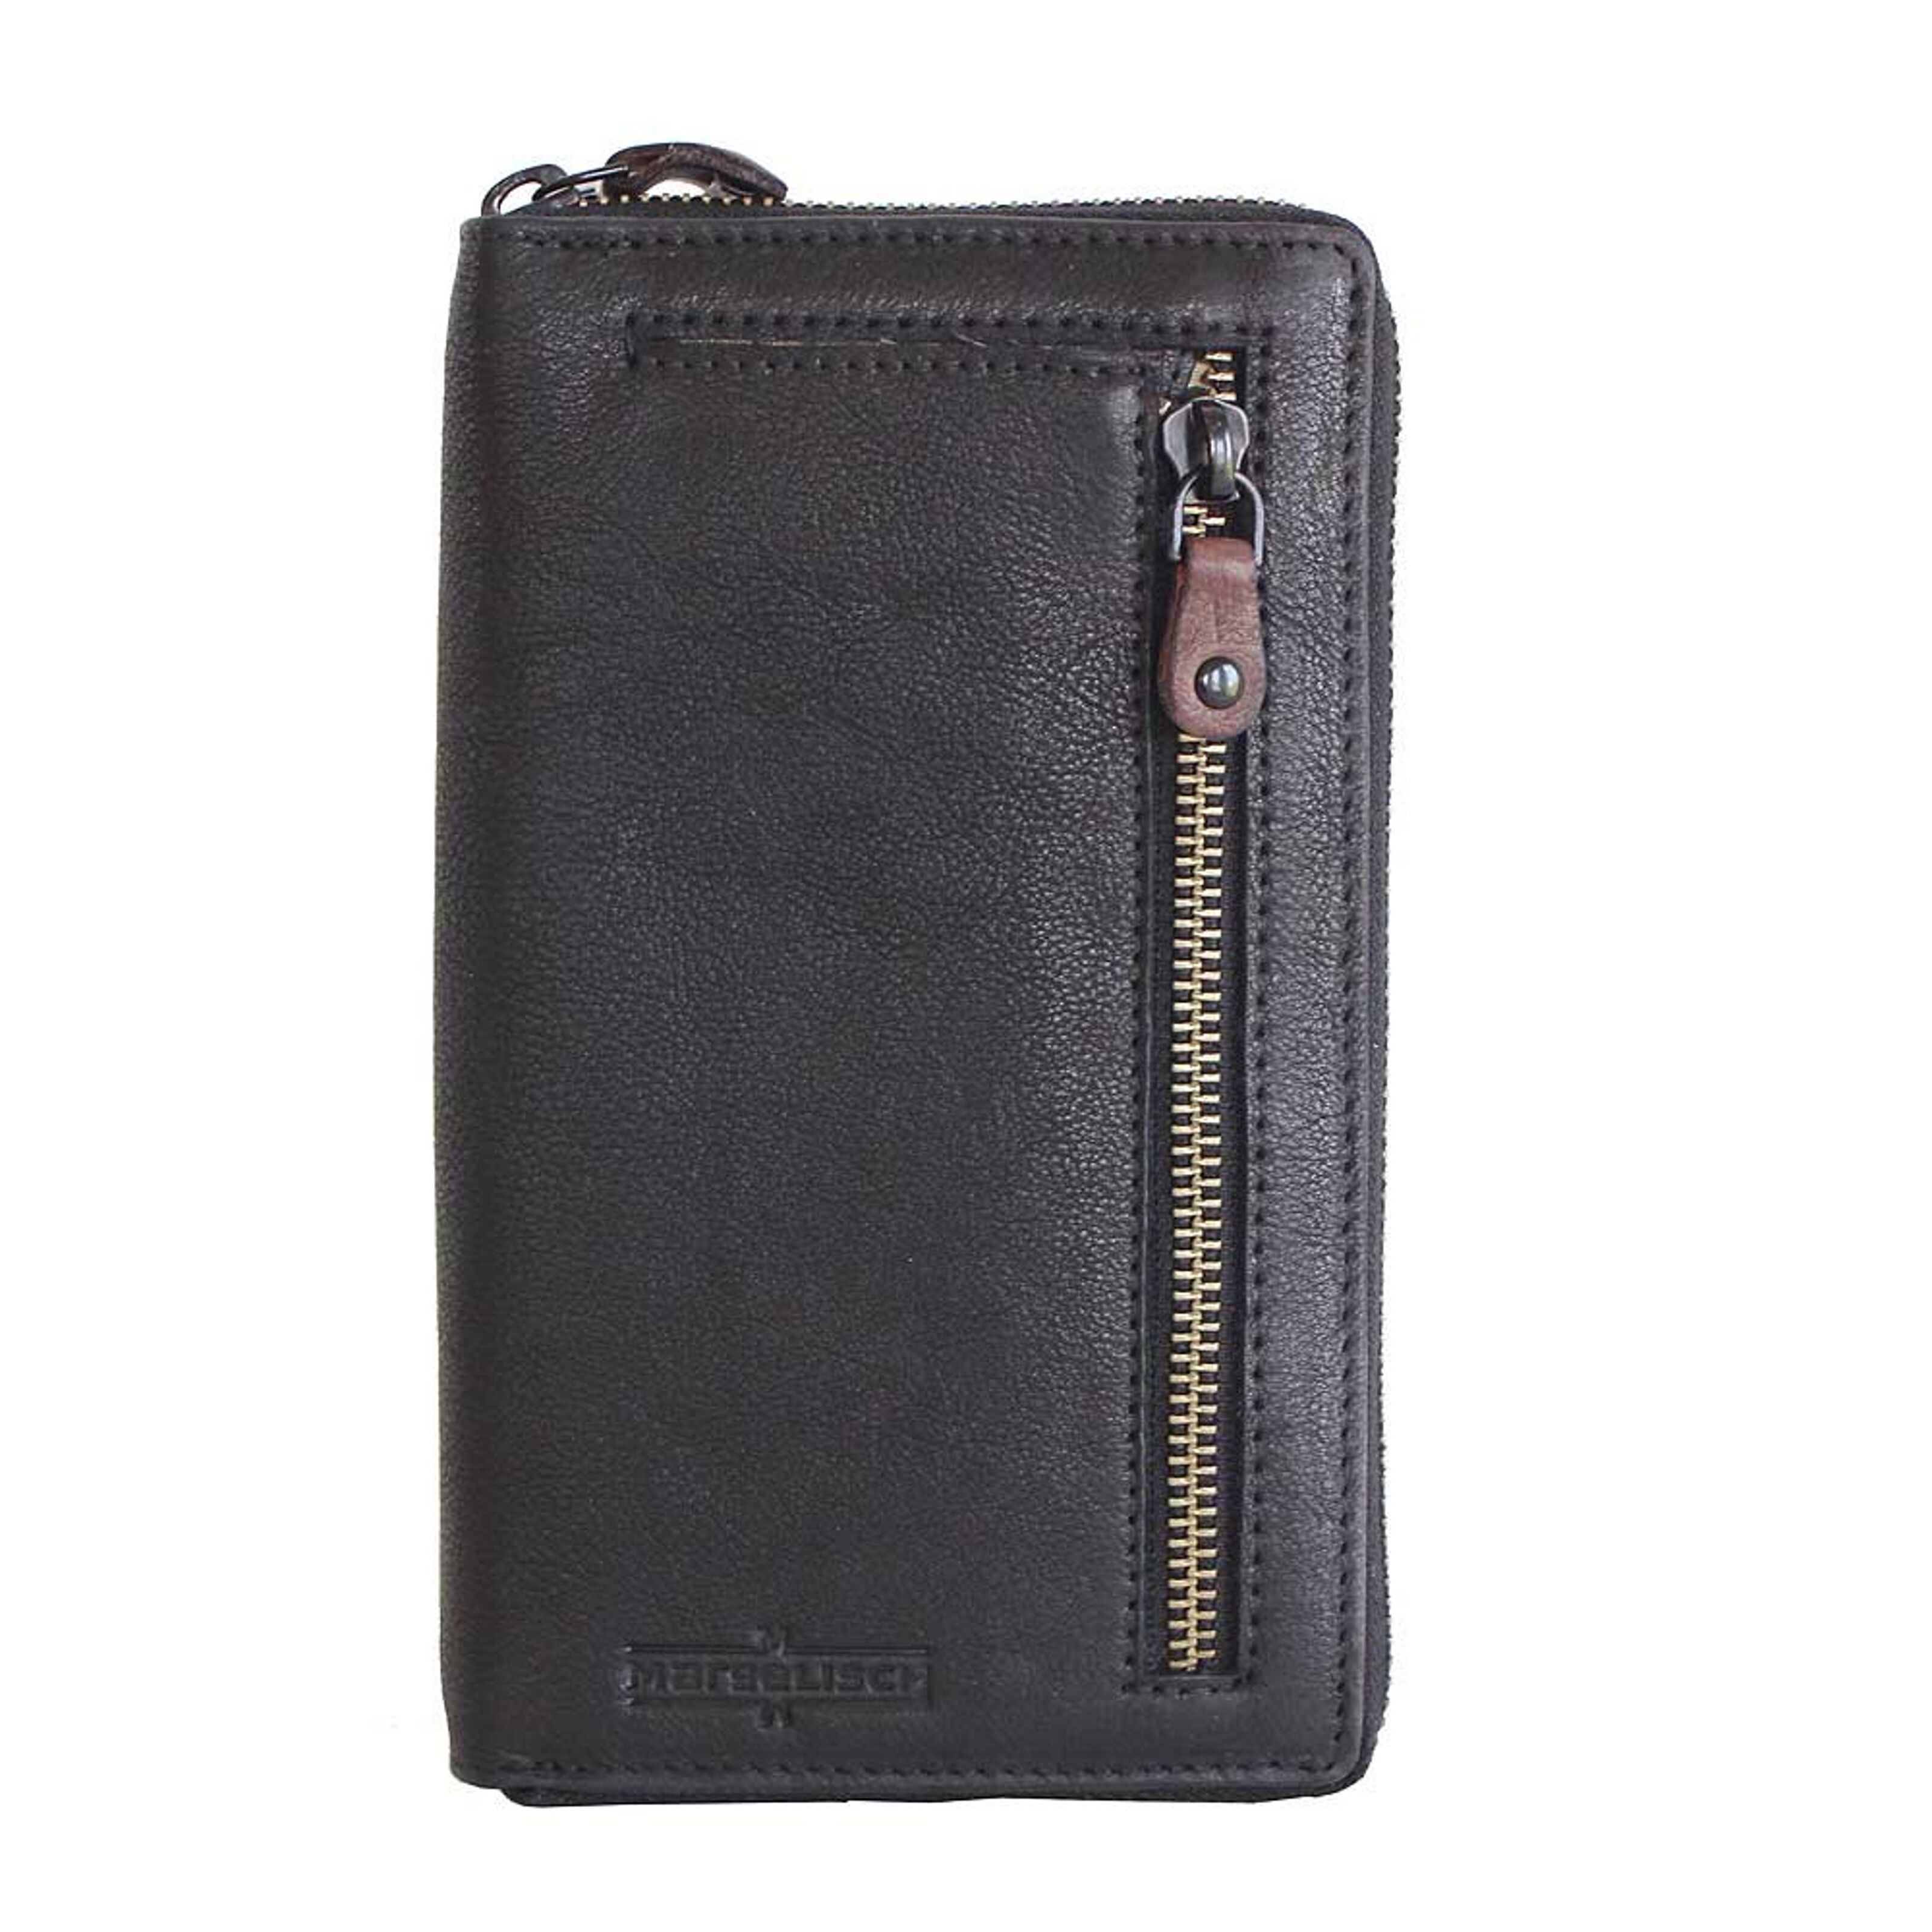 Buy Paris leather wholesale black MARGELISCH 1 wallet